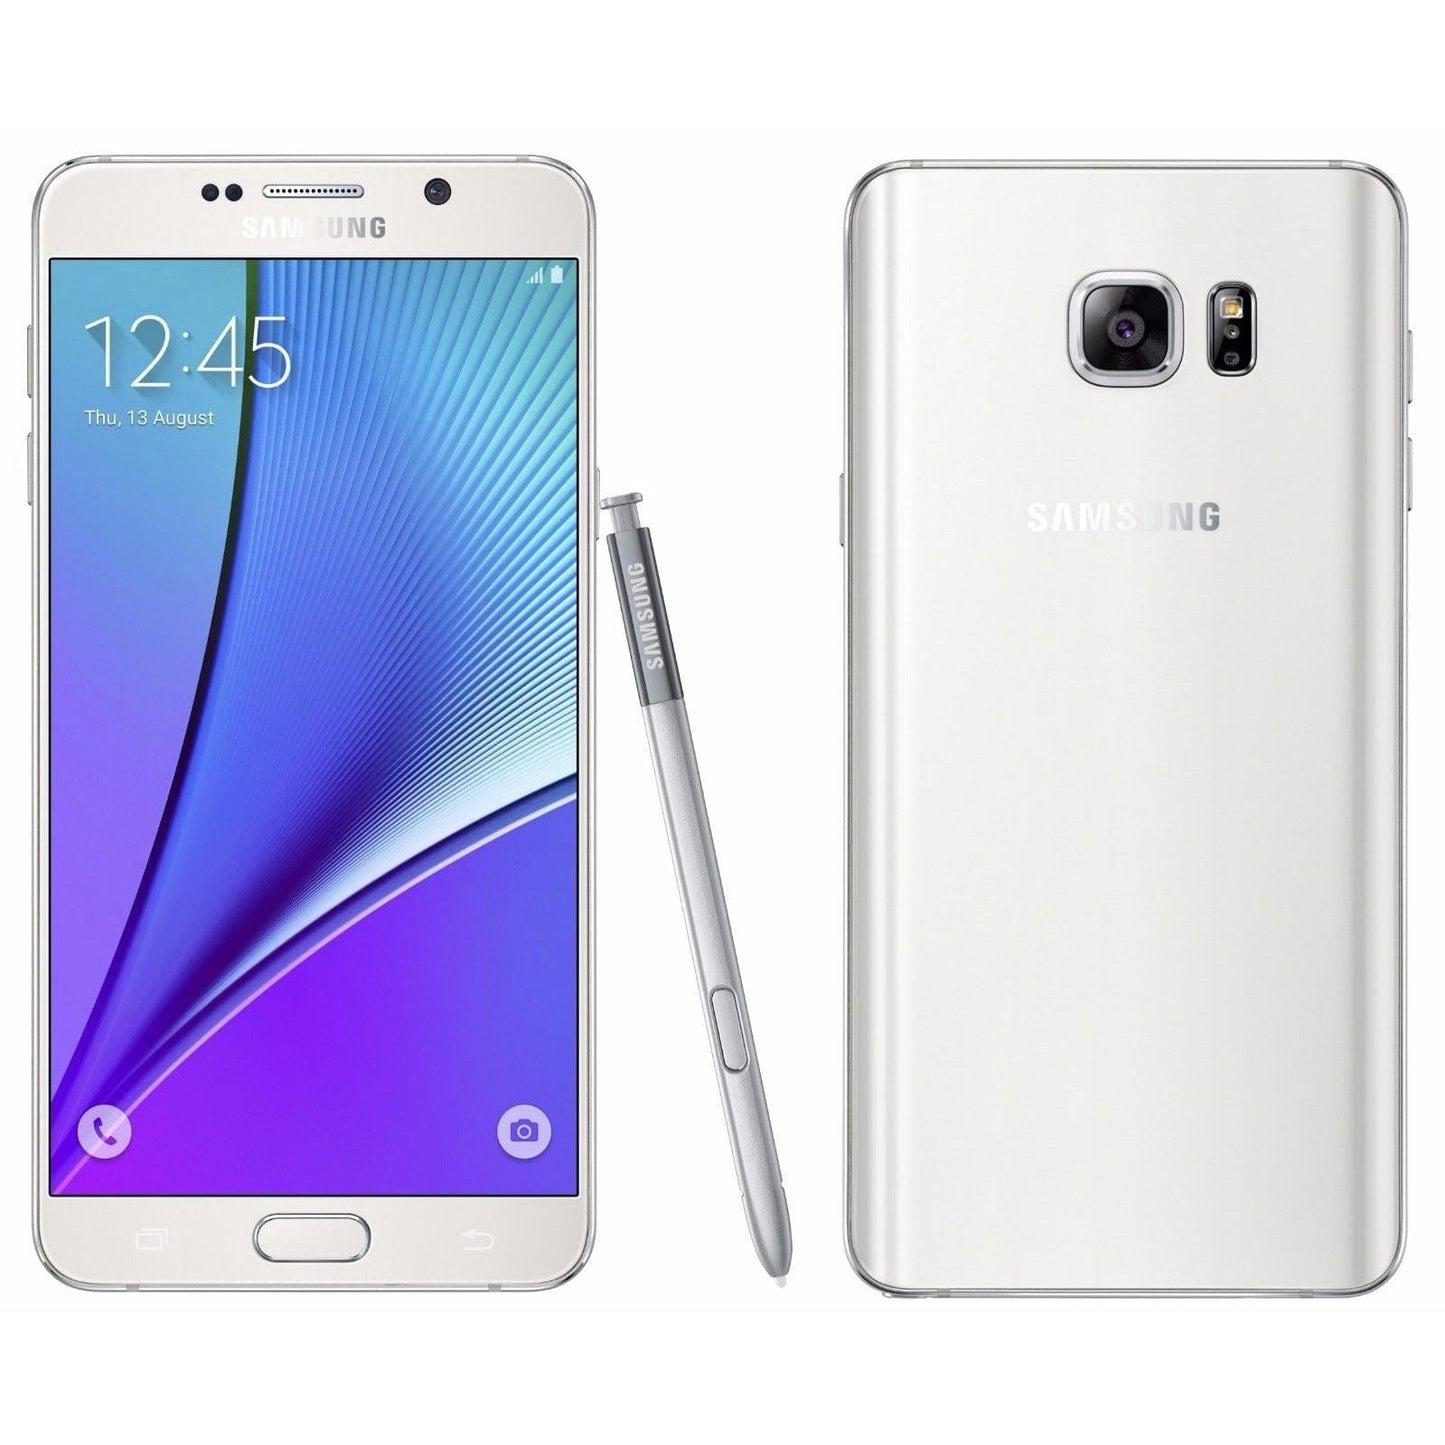 Samsung Galaxy Note5 - 32 GB - White Pearl - Unlocked - GSM